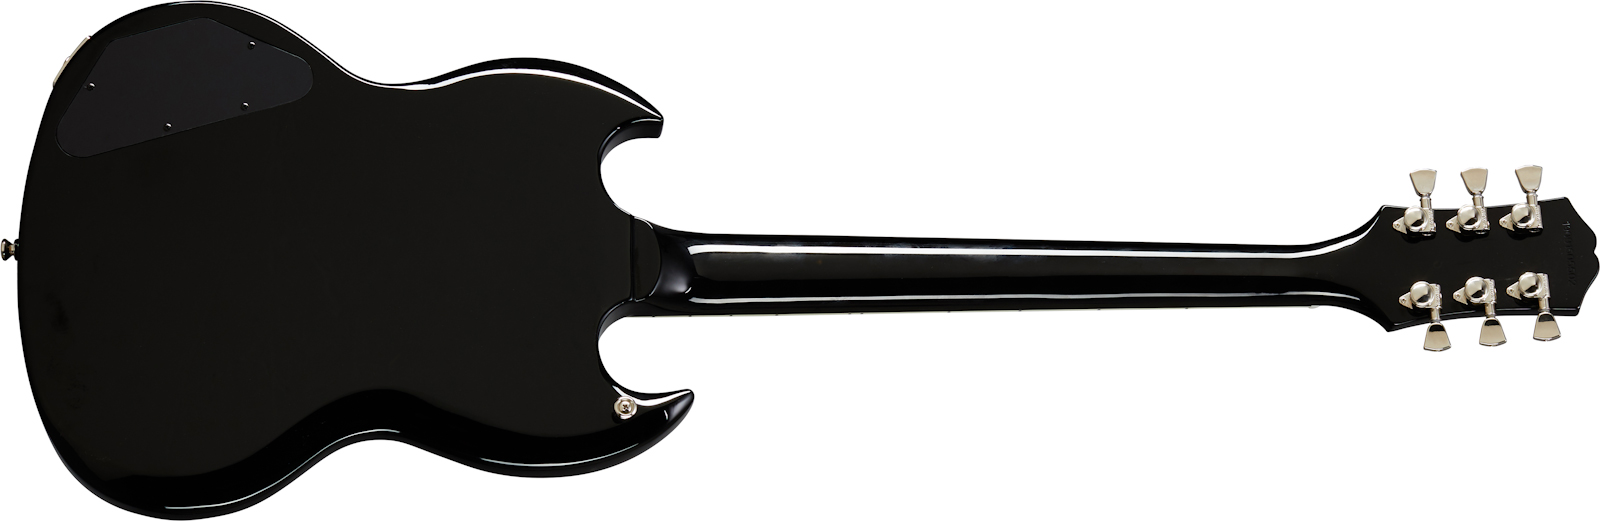 Epiphone Sg Modern Figured 2h Ht Eb - Black Transparent - Double cut electric guitar - Variation 1